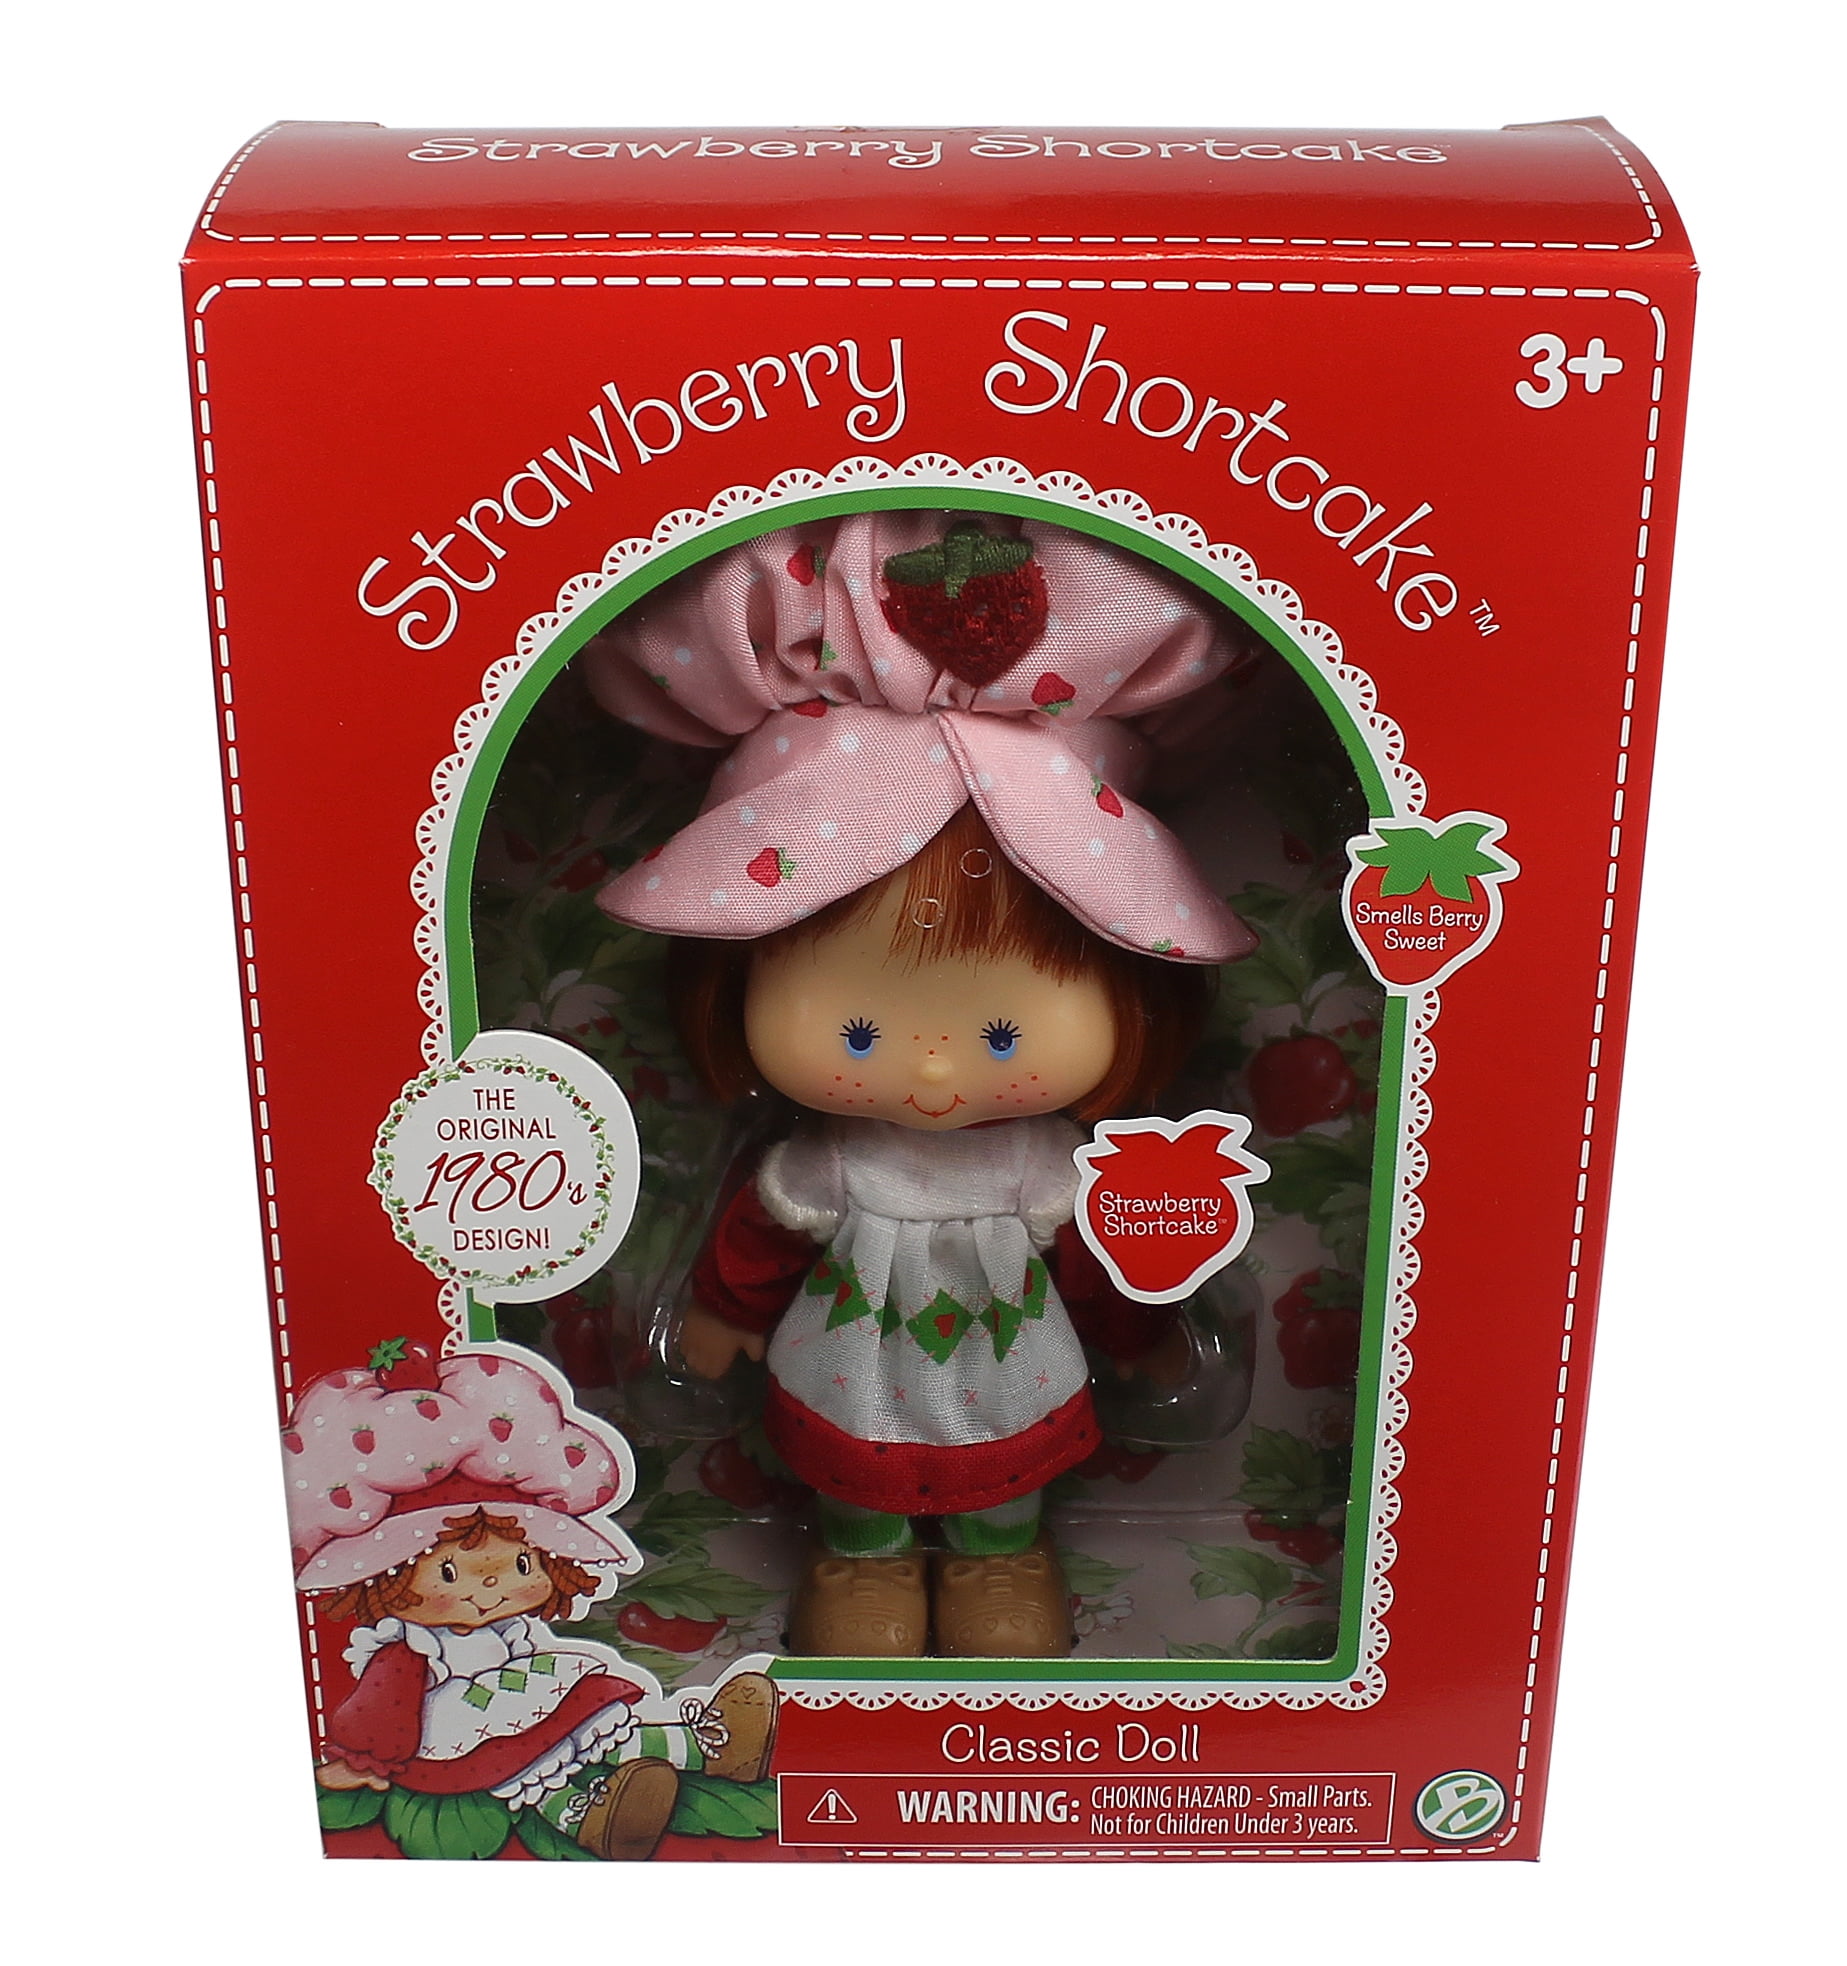 Record Chip Bowl Disney Barbie Spiderman Snow White Strawberry Shortcake 